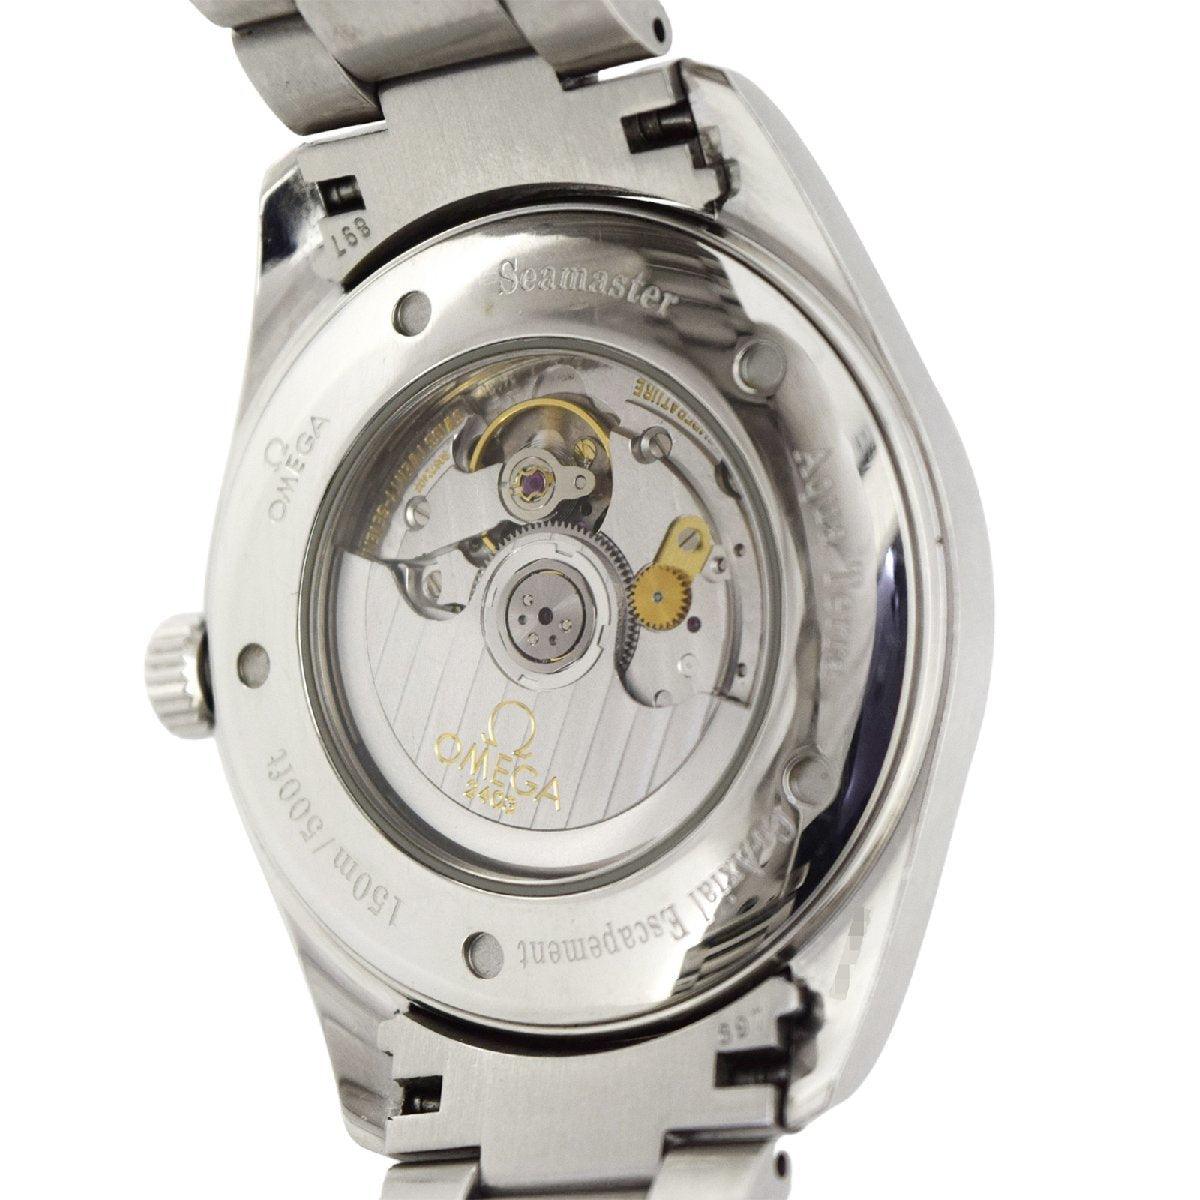 Omega Seamaster Railmaster Chronometer 2502.52 Men's Watch - Murphy Johnson Watches Co.